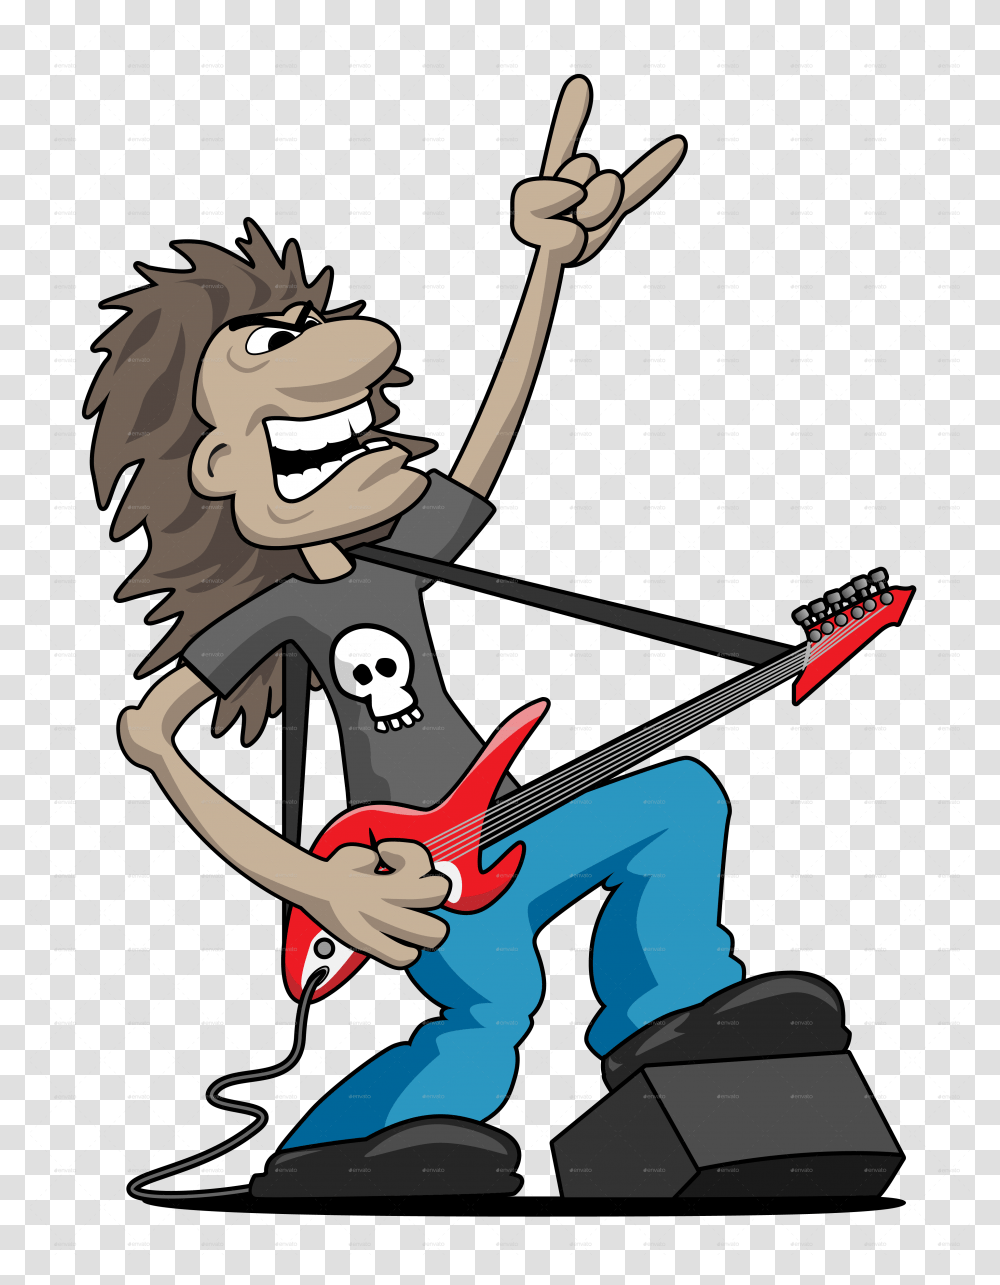 Heavy Metal Rock Guitarist Cartoon Guitar Rock Star Cartoon, Leisure Activities, Poster, Advertisement, Ninja Transparent Png